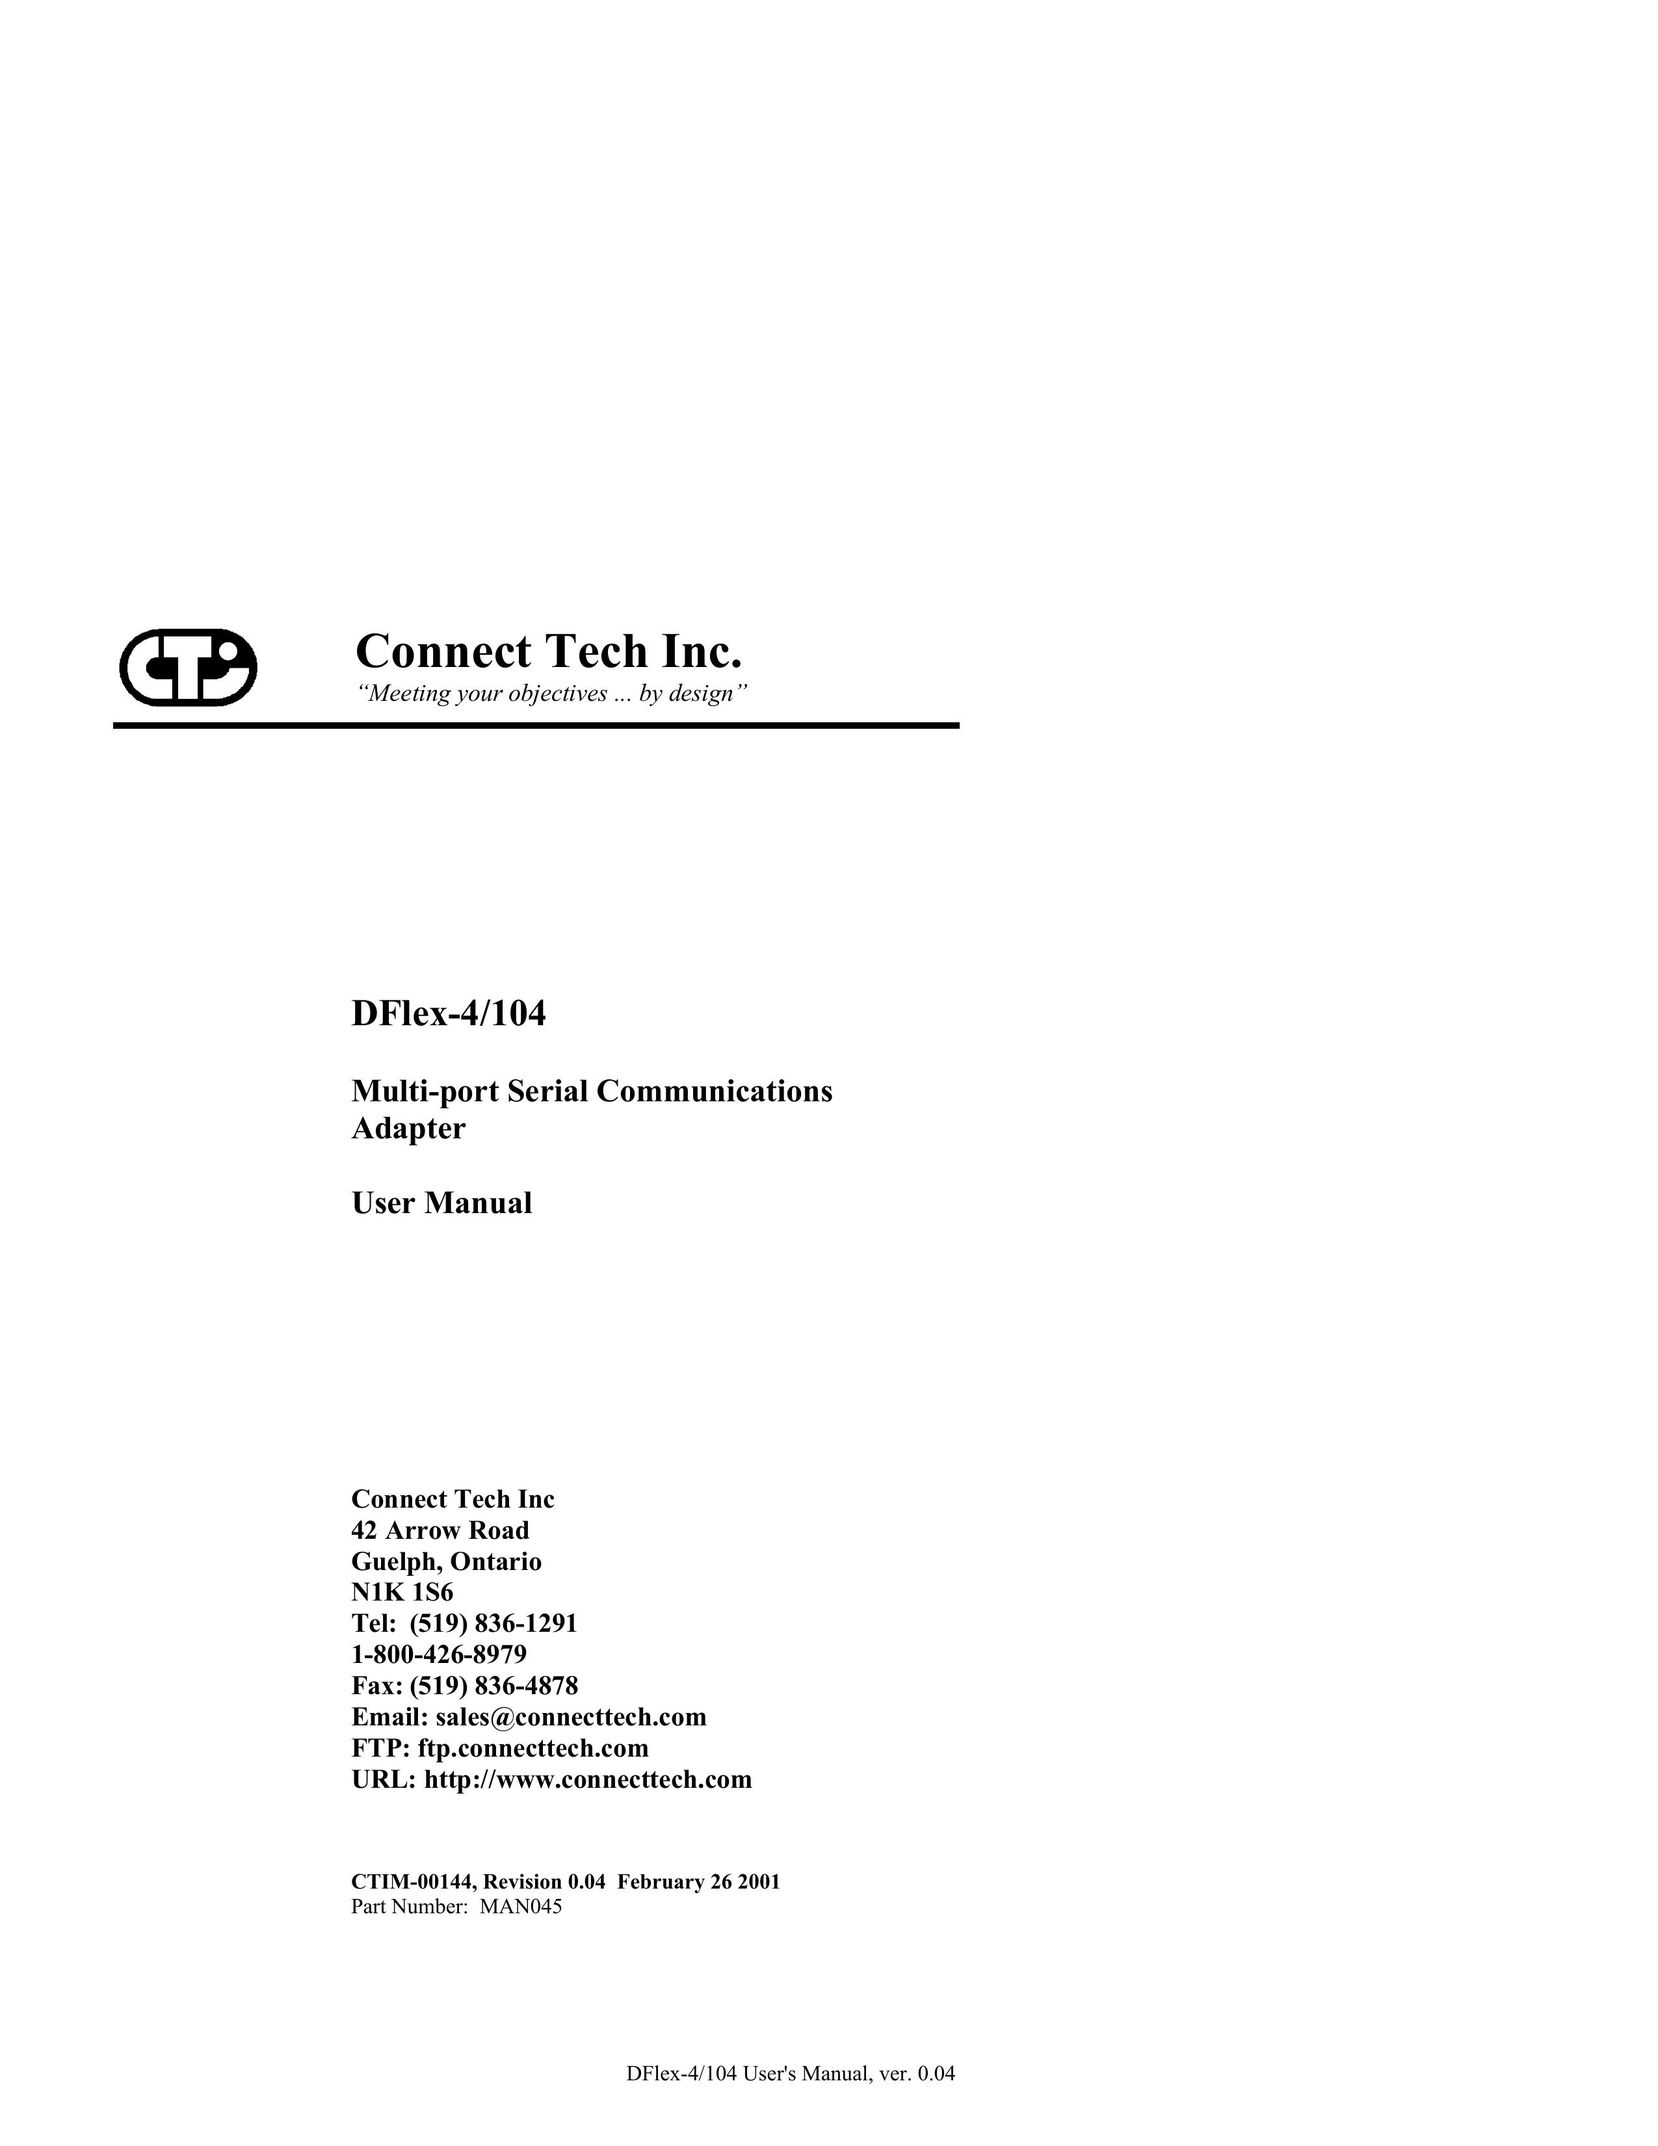 Connect Tech DFlex-4/104 Network Card User Manual